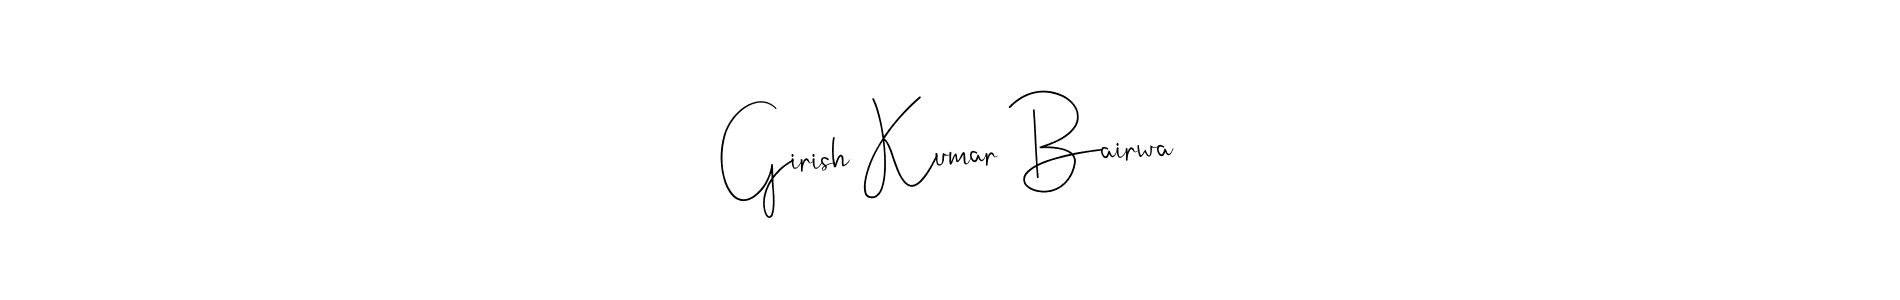 Make a beautiful signature design for name Girish Kumar Bairwa. Use this online signature maker to create a handwritten signature for free. Girish Kumar Bairwa signature style 4 images and pictures png